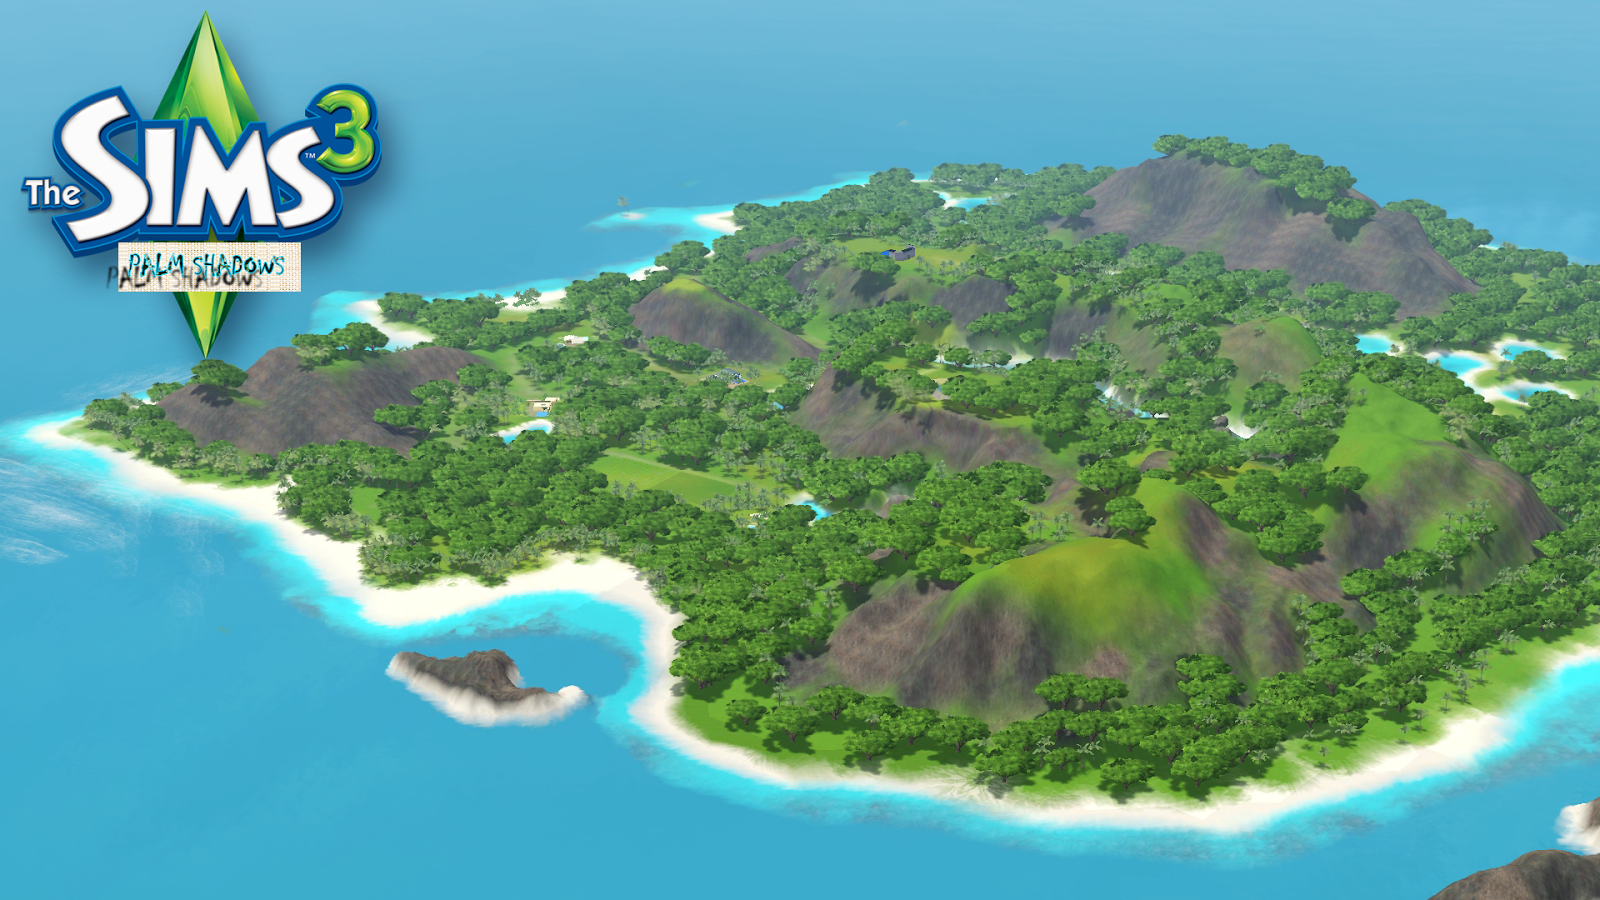 Sims 3 worlds. Города острова для симс 3. Городок остров симс 3. Остров Берилловые отмели симс 3. SIMS 3 карта.